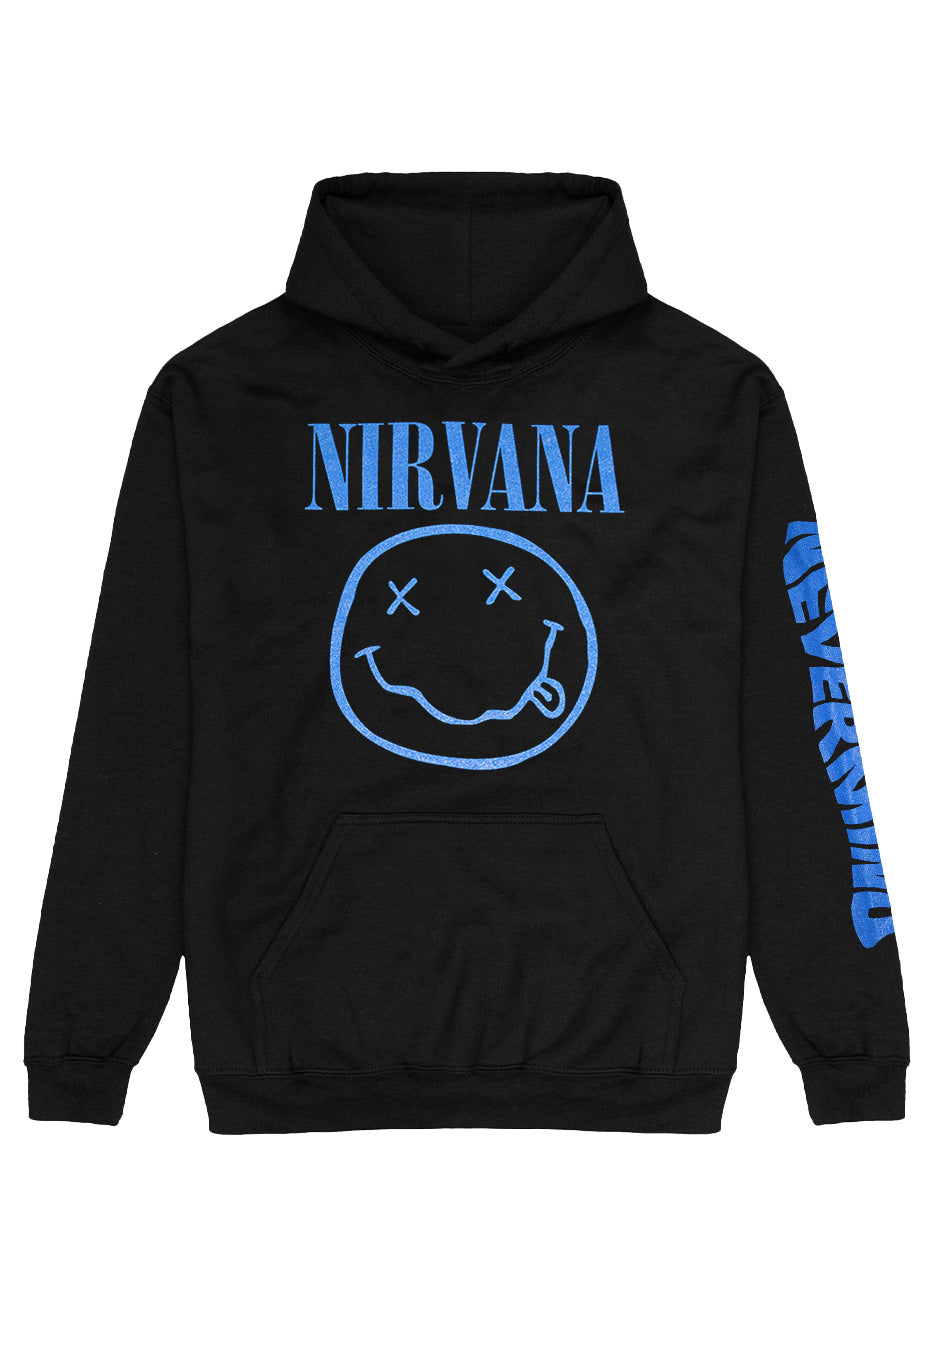 Nirvana - Nevermind Smile - Hoodie